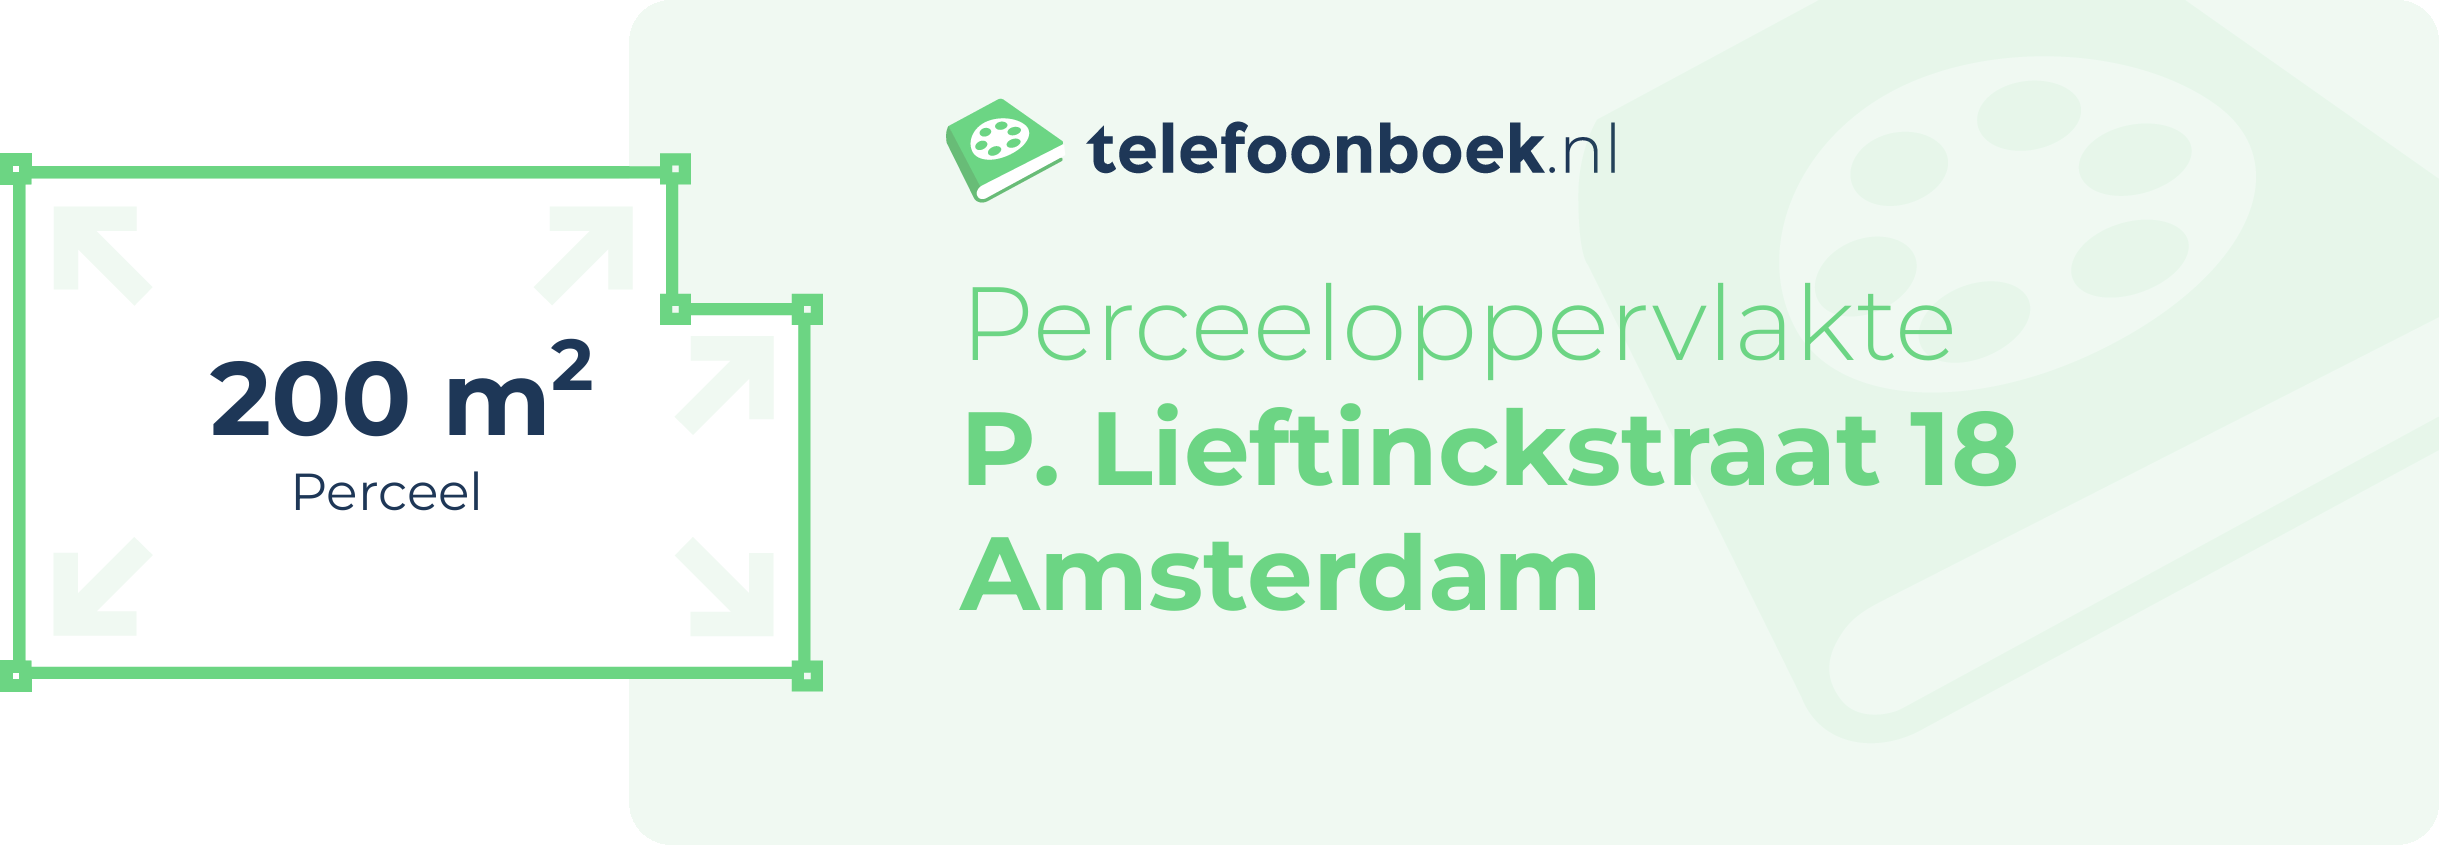 Perceeloppervlakte P. Lieftinckstraat 18 Amsterdam